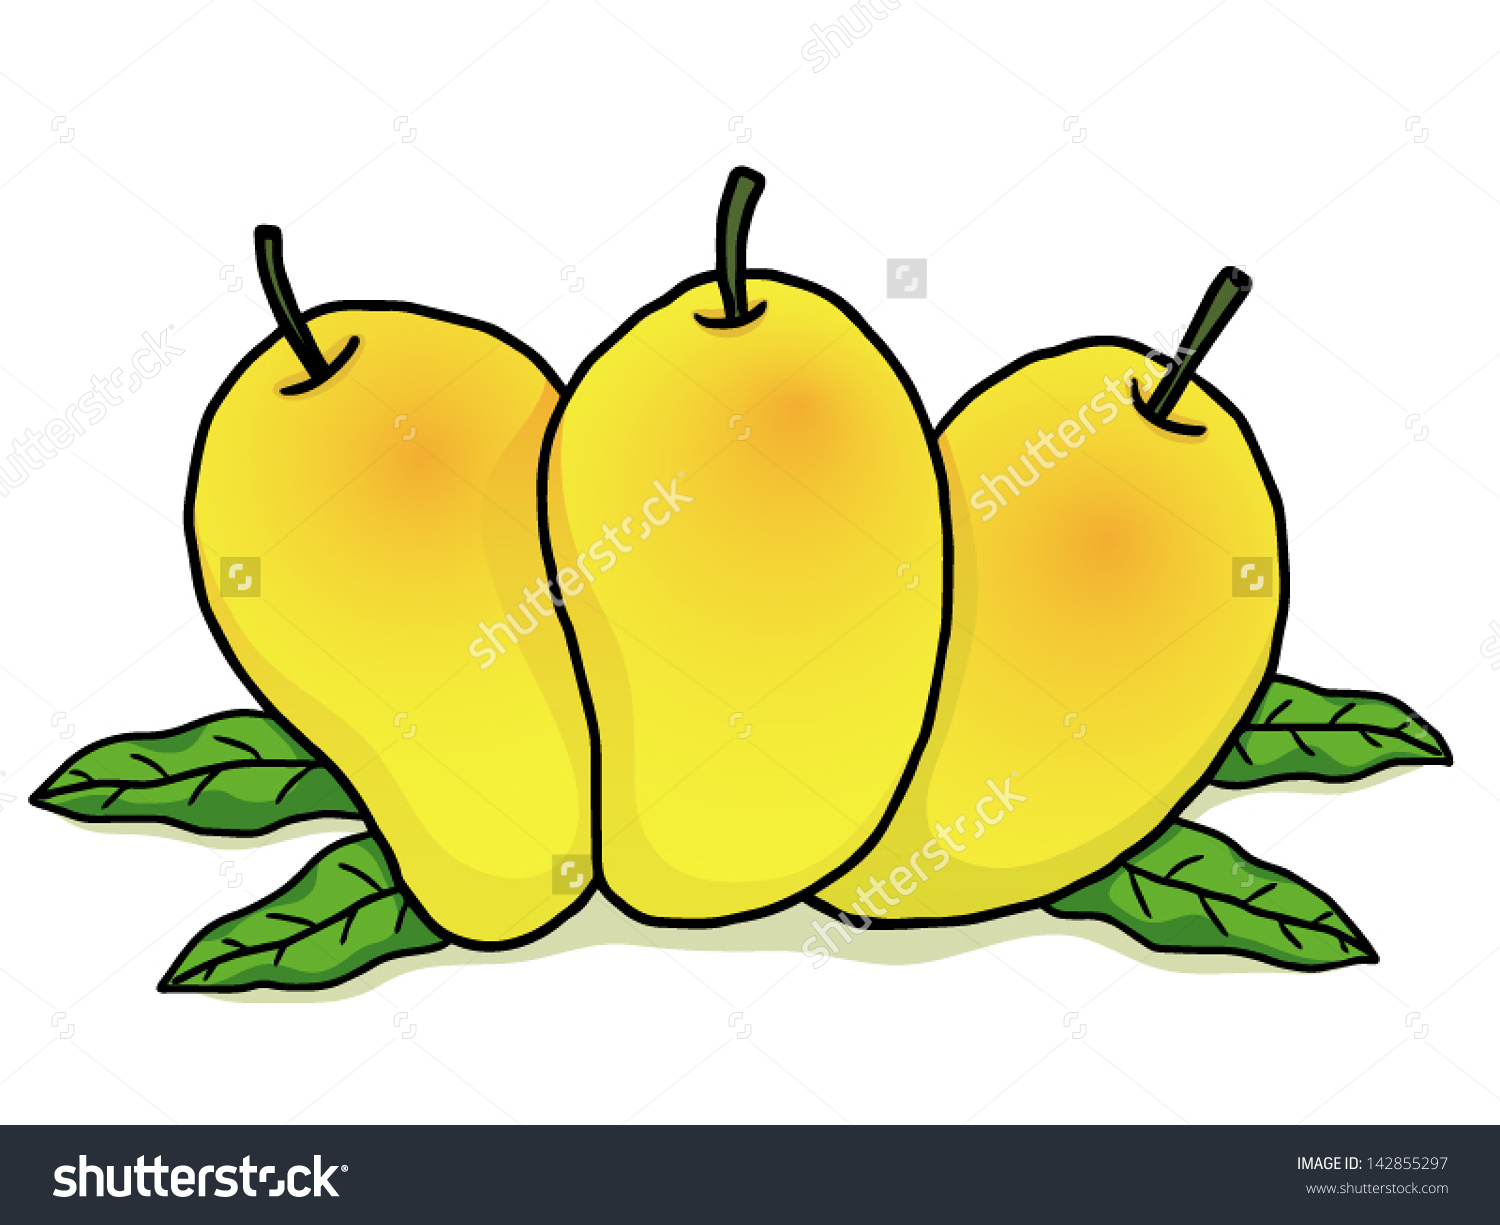 clipart of mango - photo #38